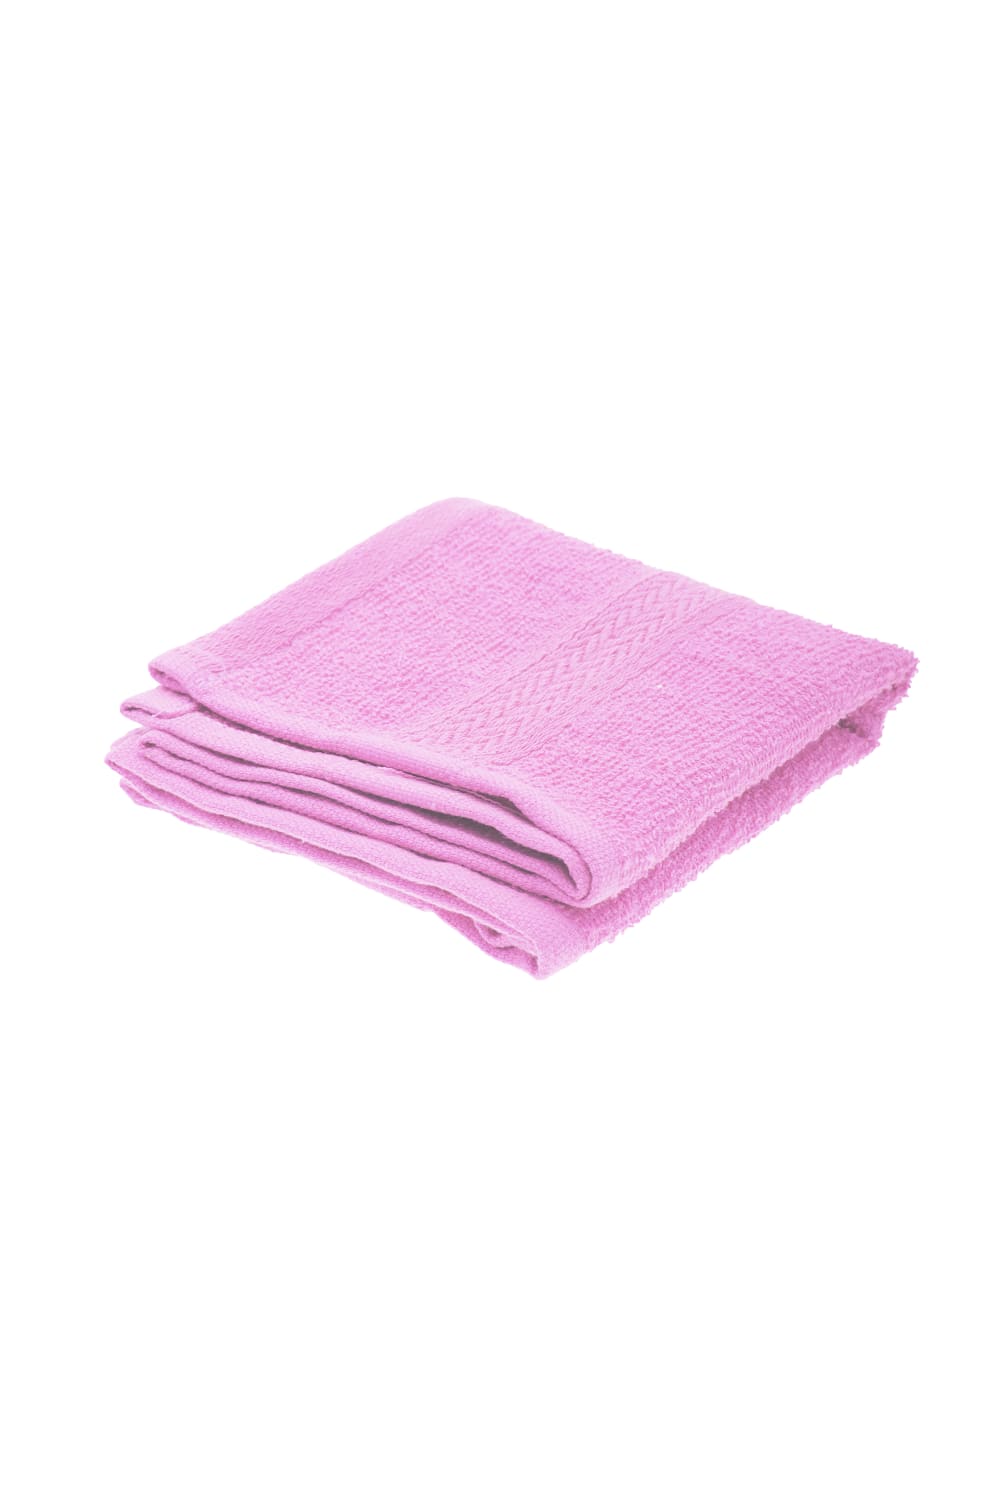 Jassz Plain Guest Hand Towel (350 GSM) (Pink) (One Size)